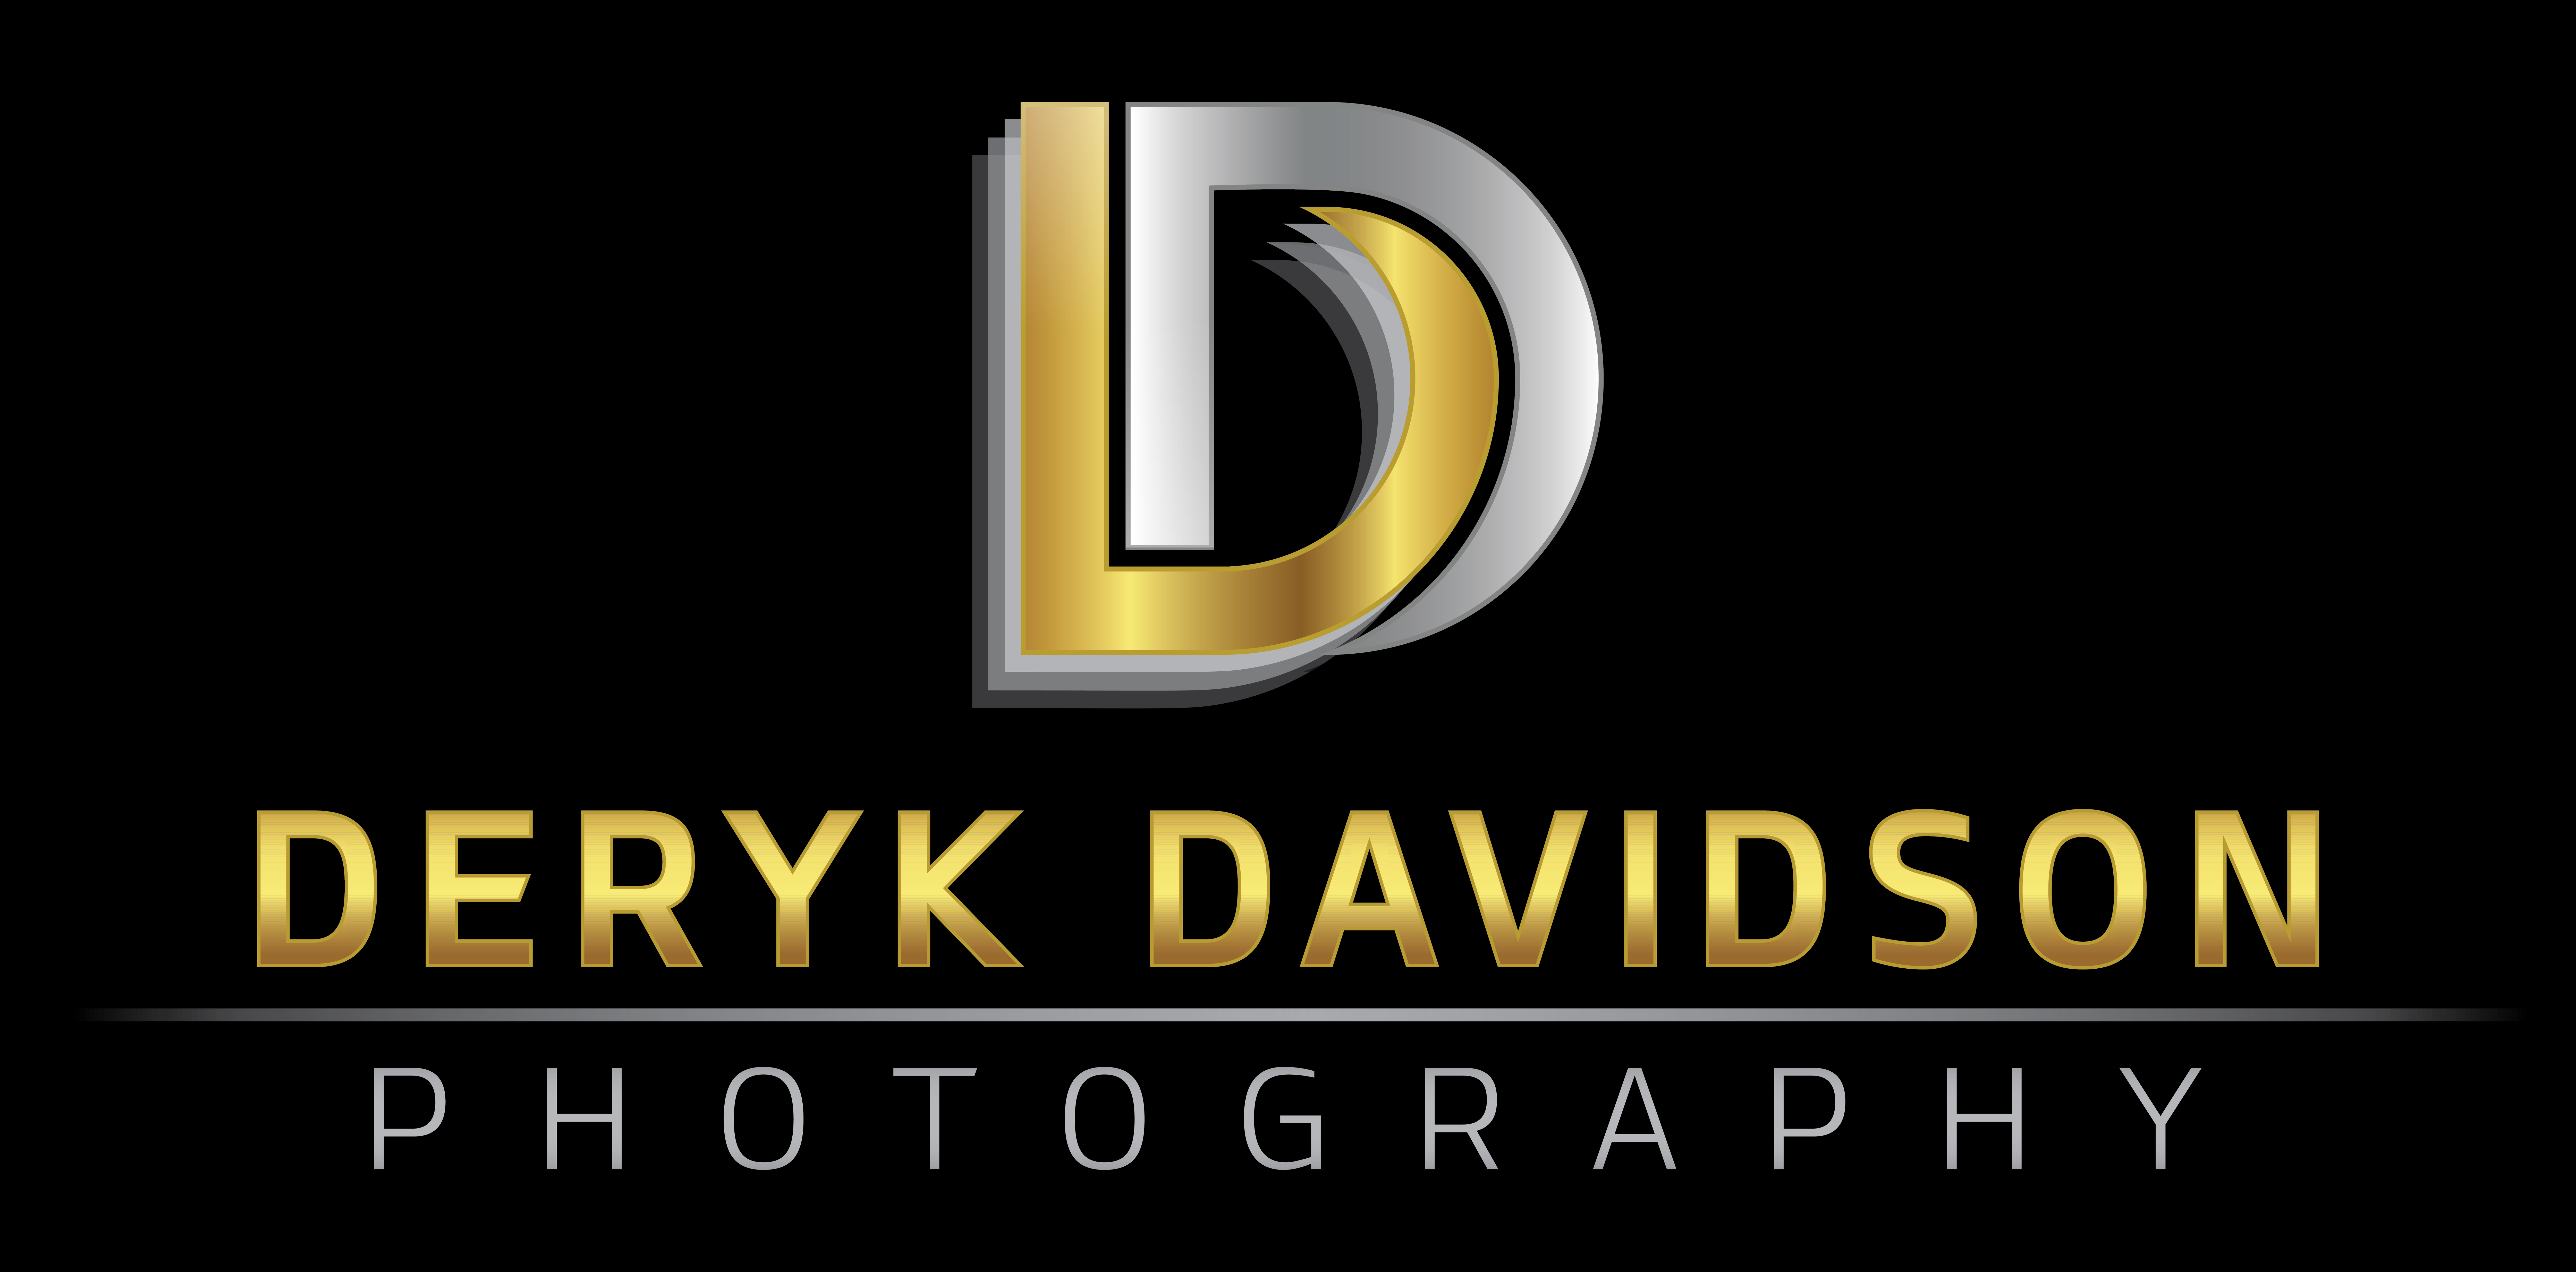 Deryk Davidson Photography Inc.